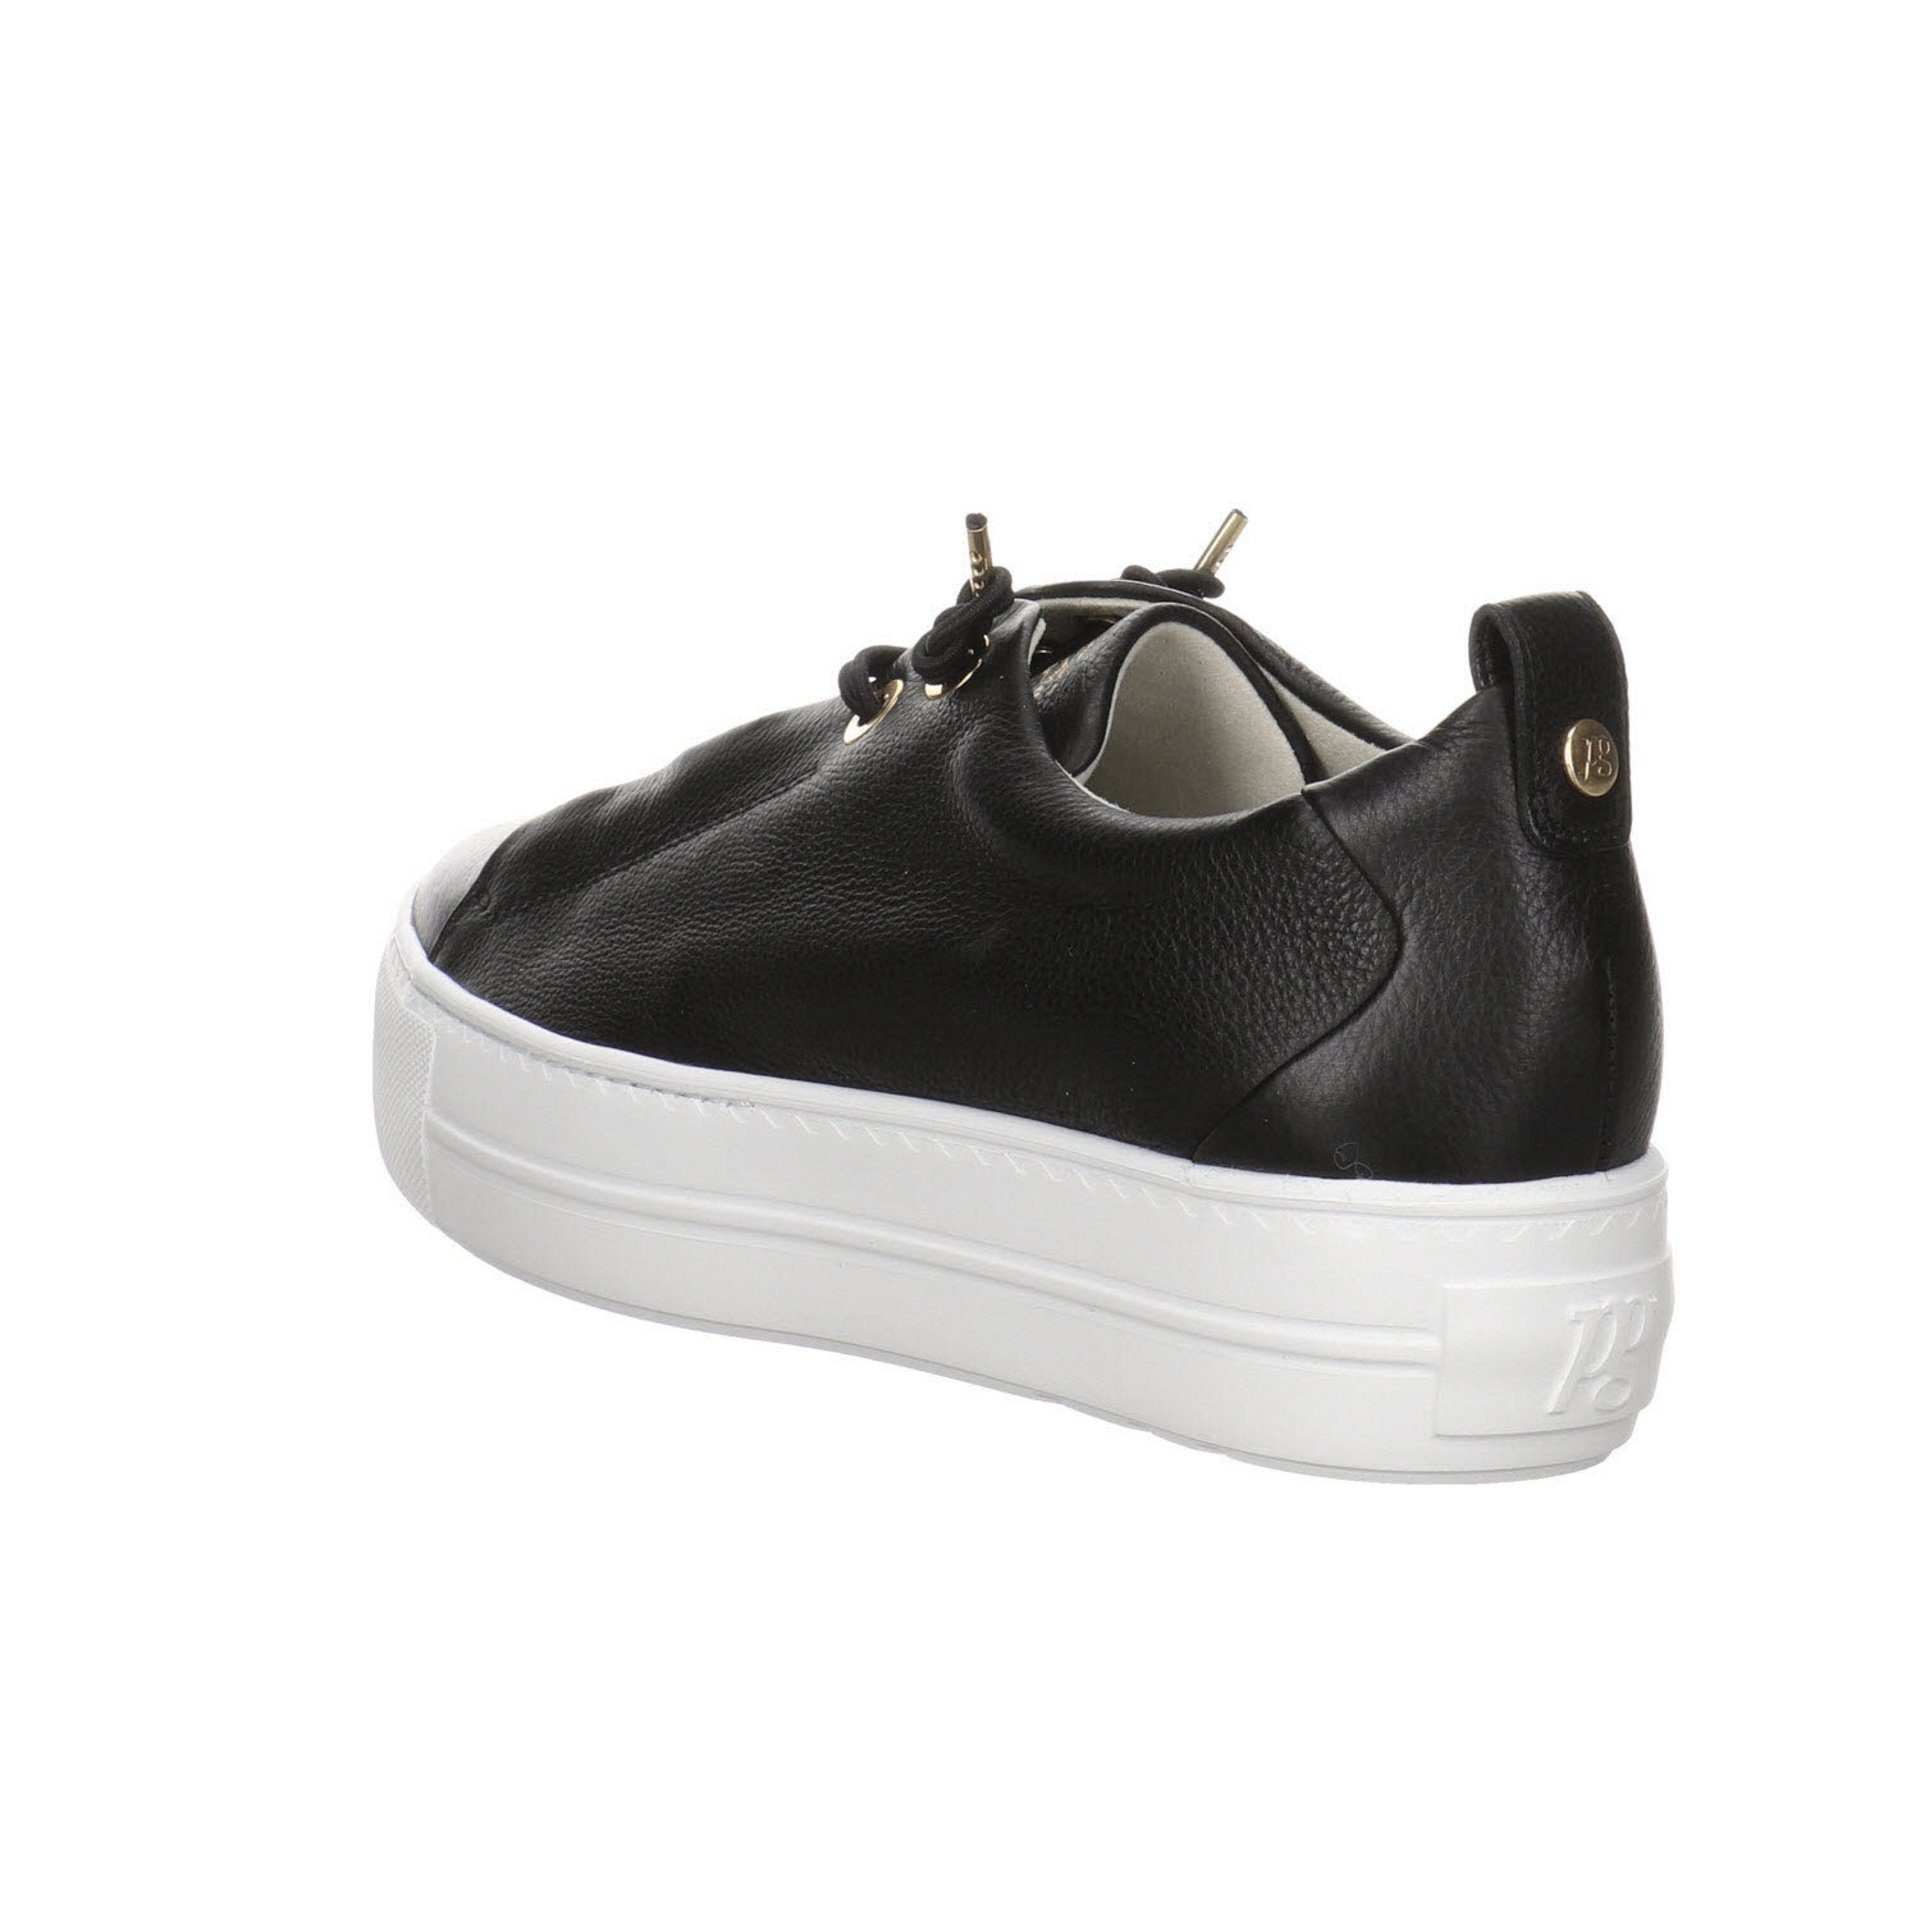 Paul Green Damen schwarz Sneaker Schuhe dunkel Slip-On Schnürschuh Sneaker Glattleder